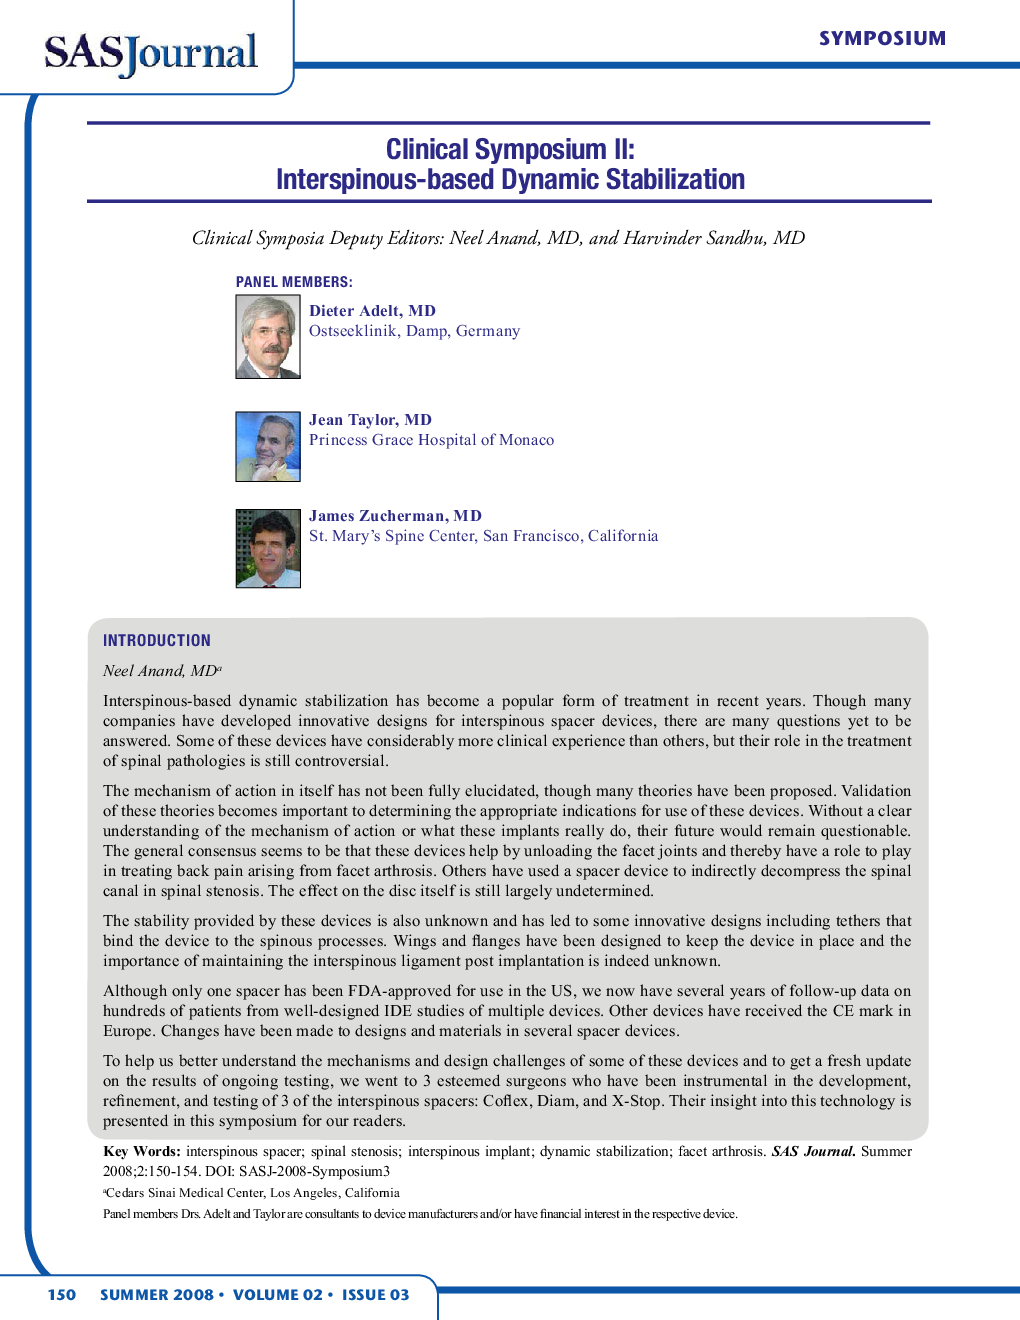 Clinical Symposium II: Interspinous-based Dynamic Stabilization